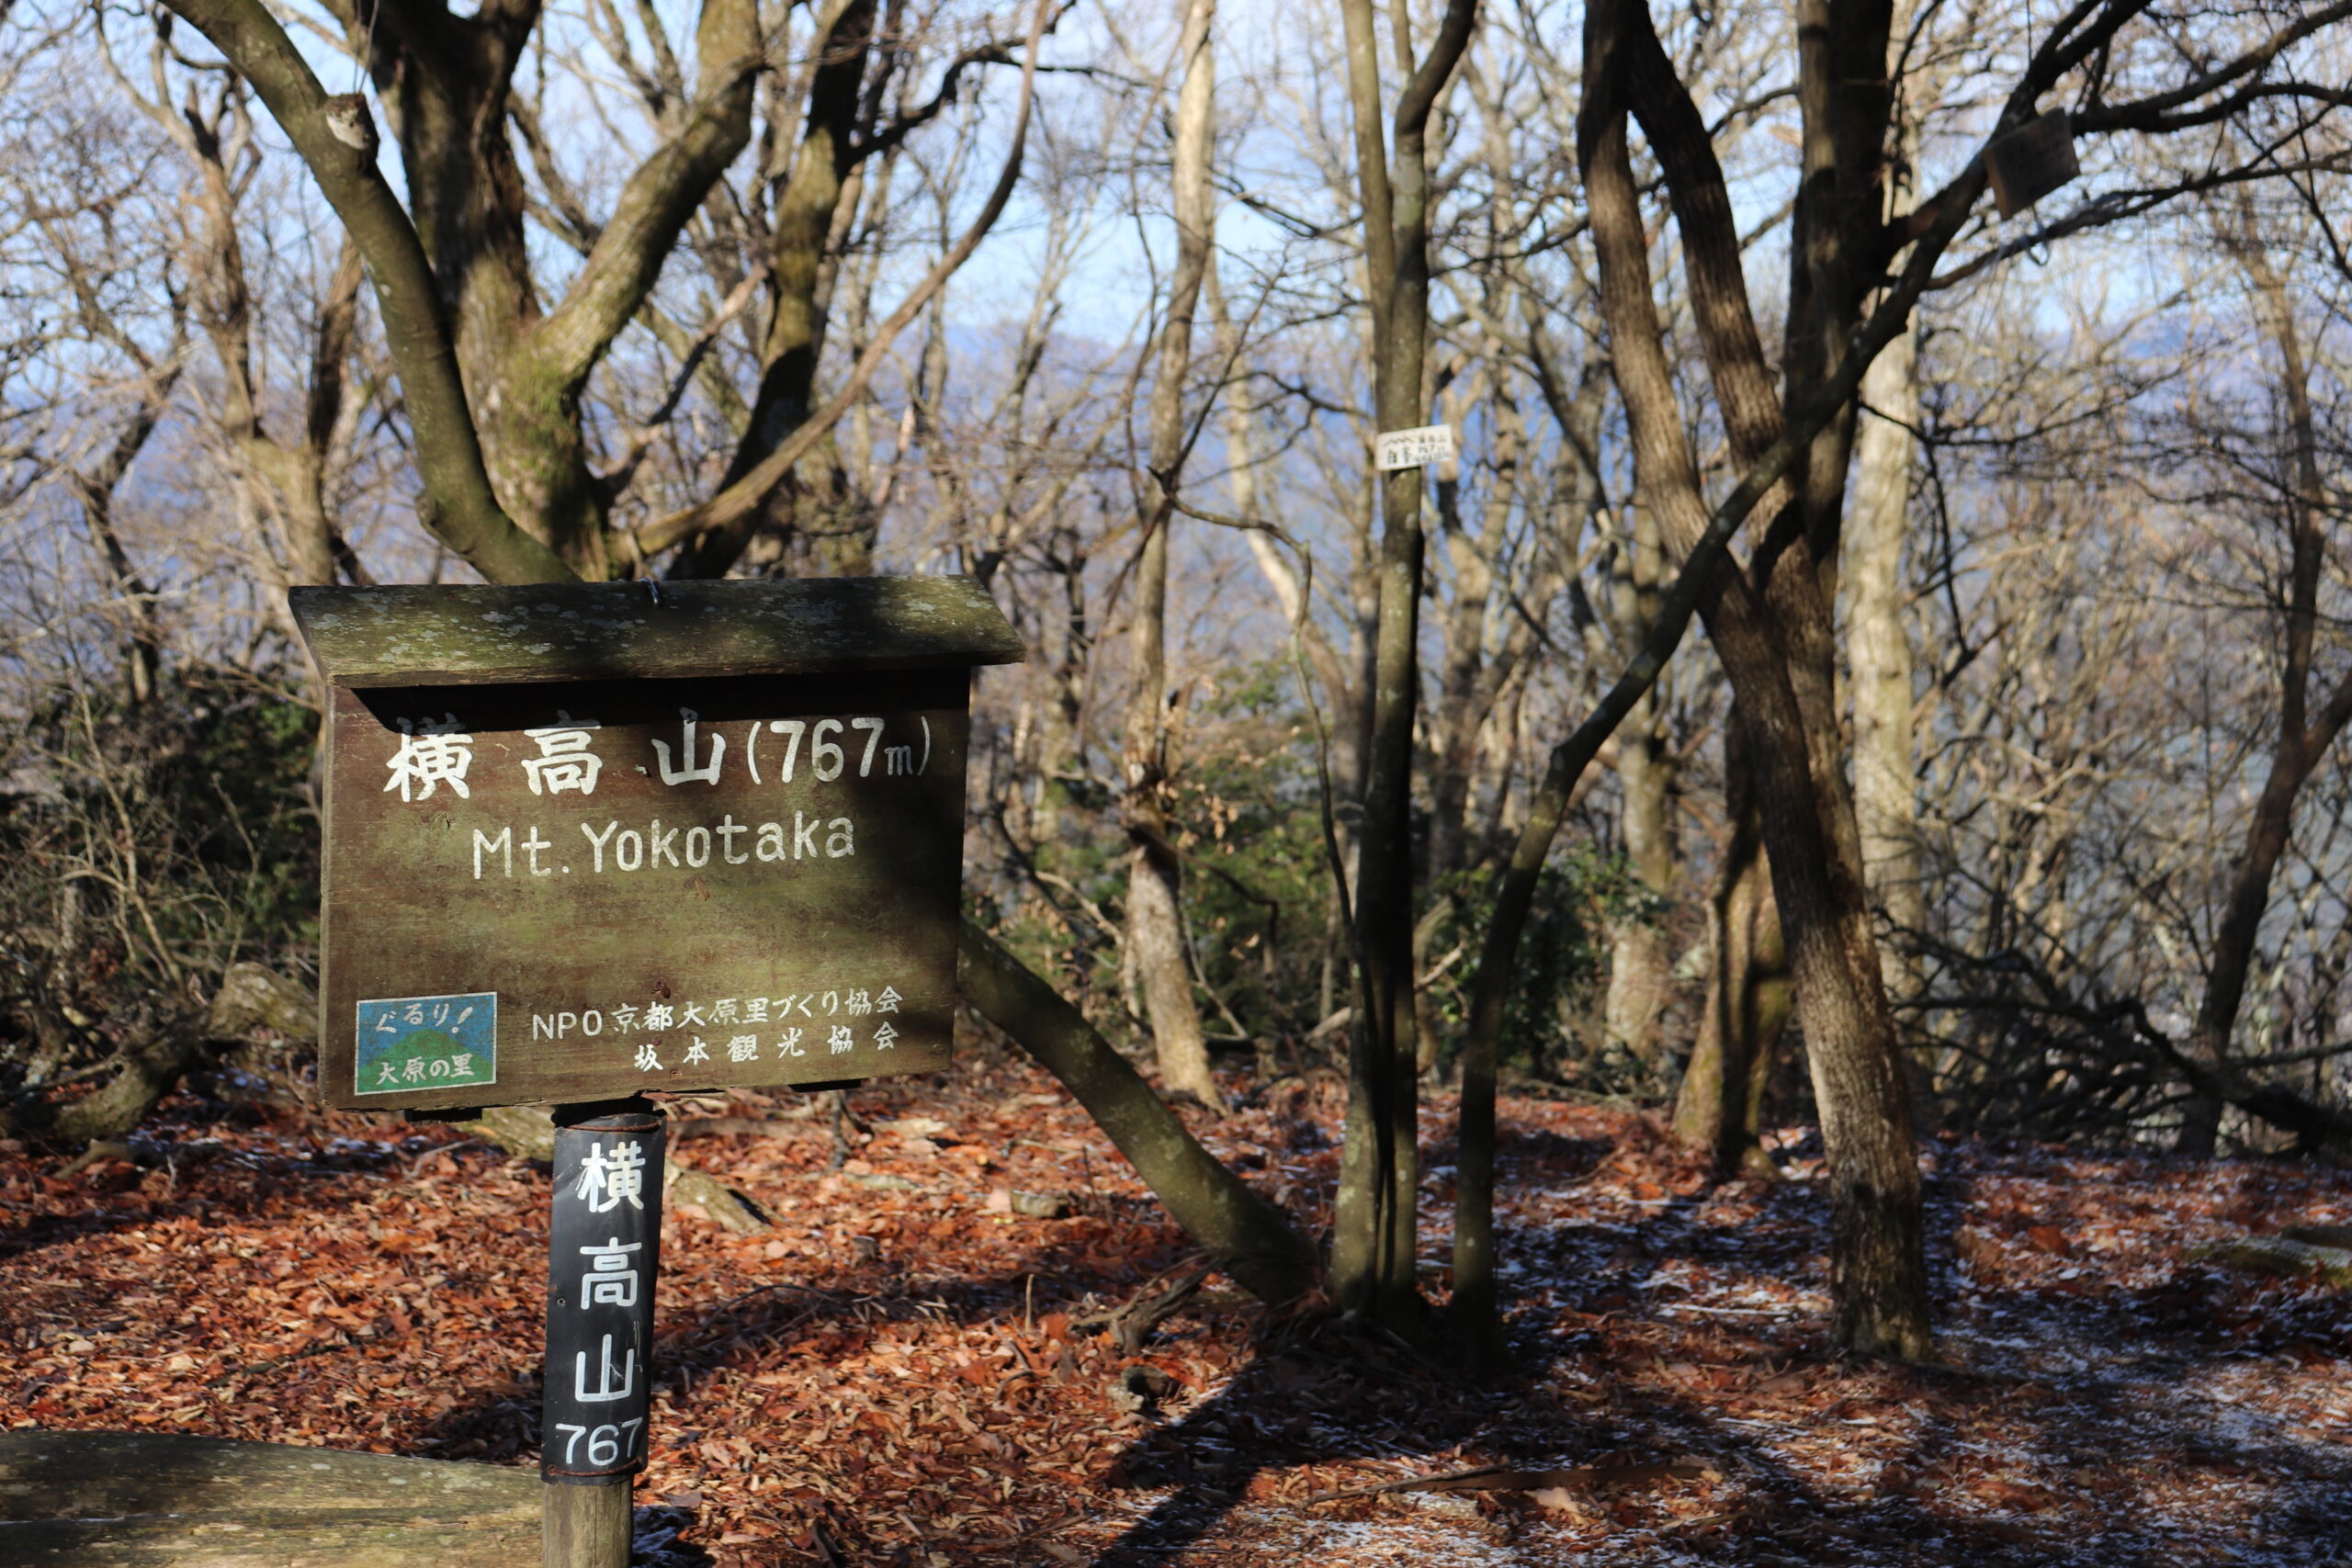 Mt. Yokotakayama on the Kitayama East Course